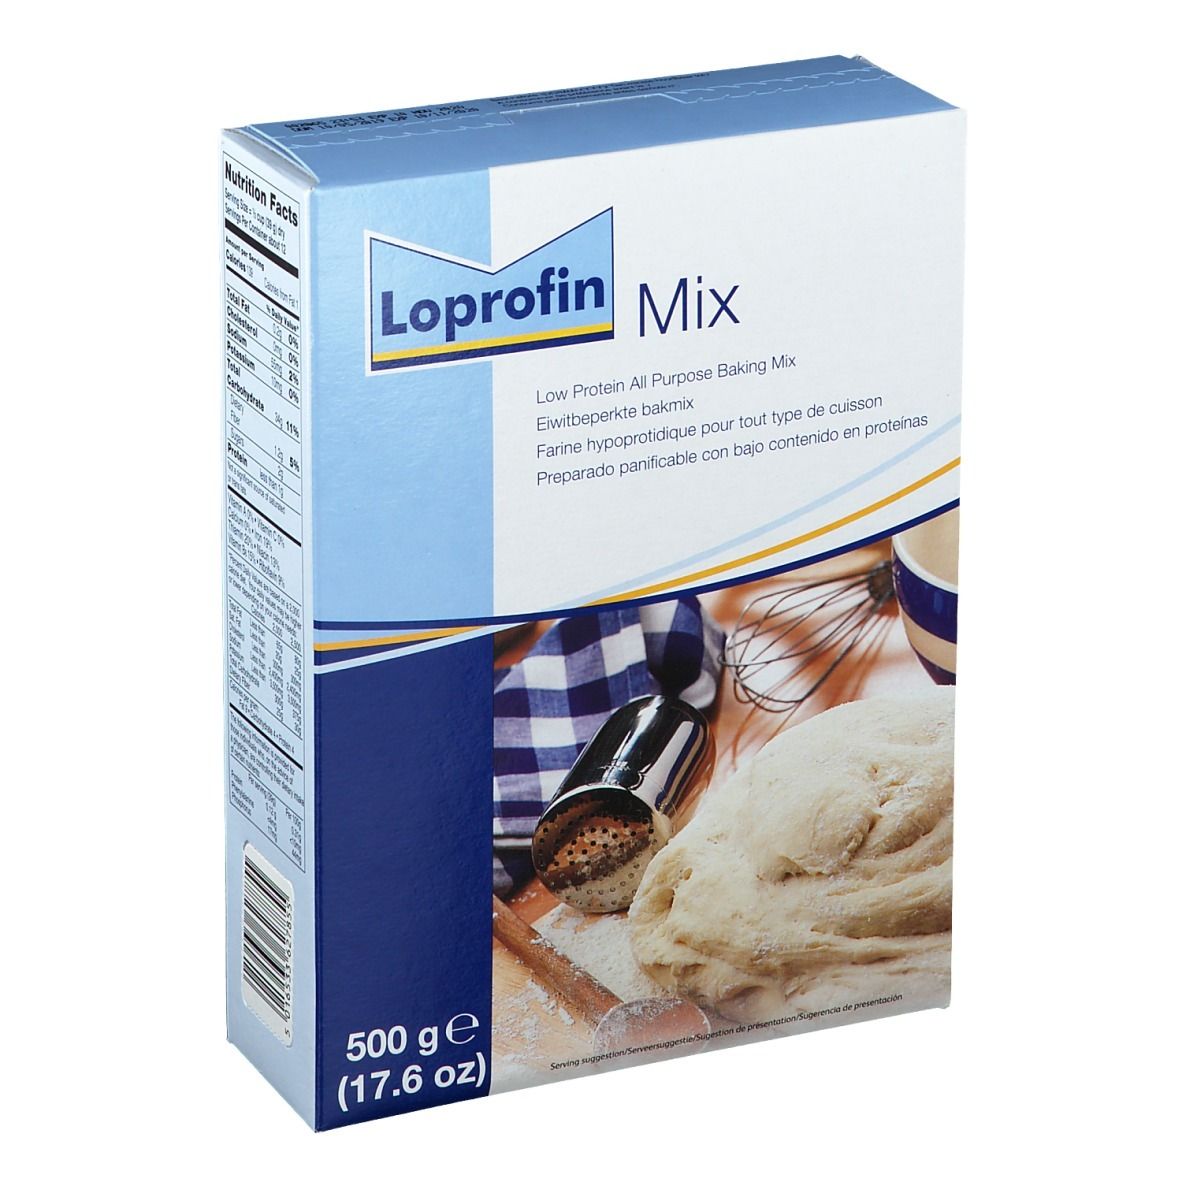 Loprofin Mix